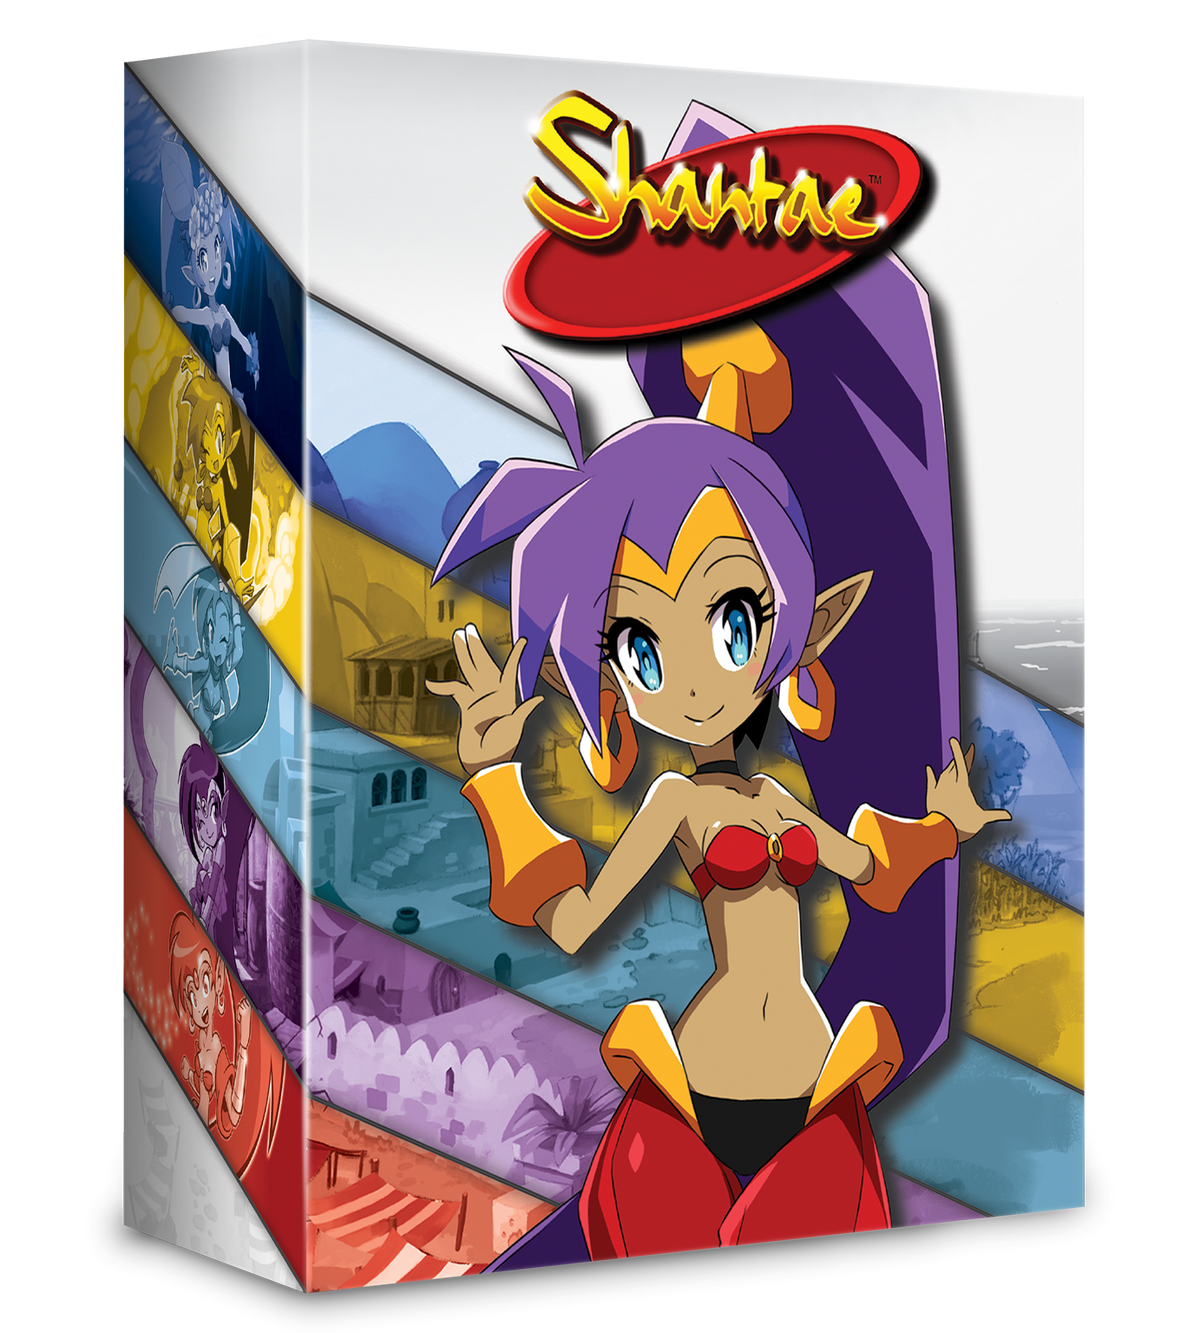 Shantae PS5 Slipcover